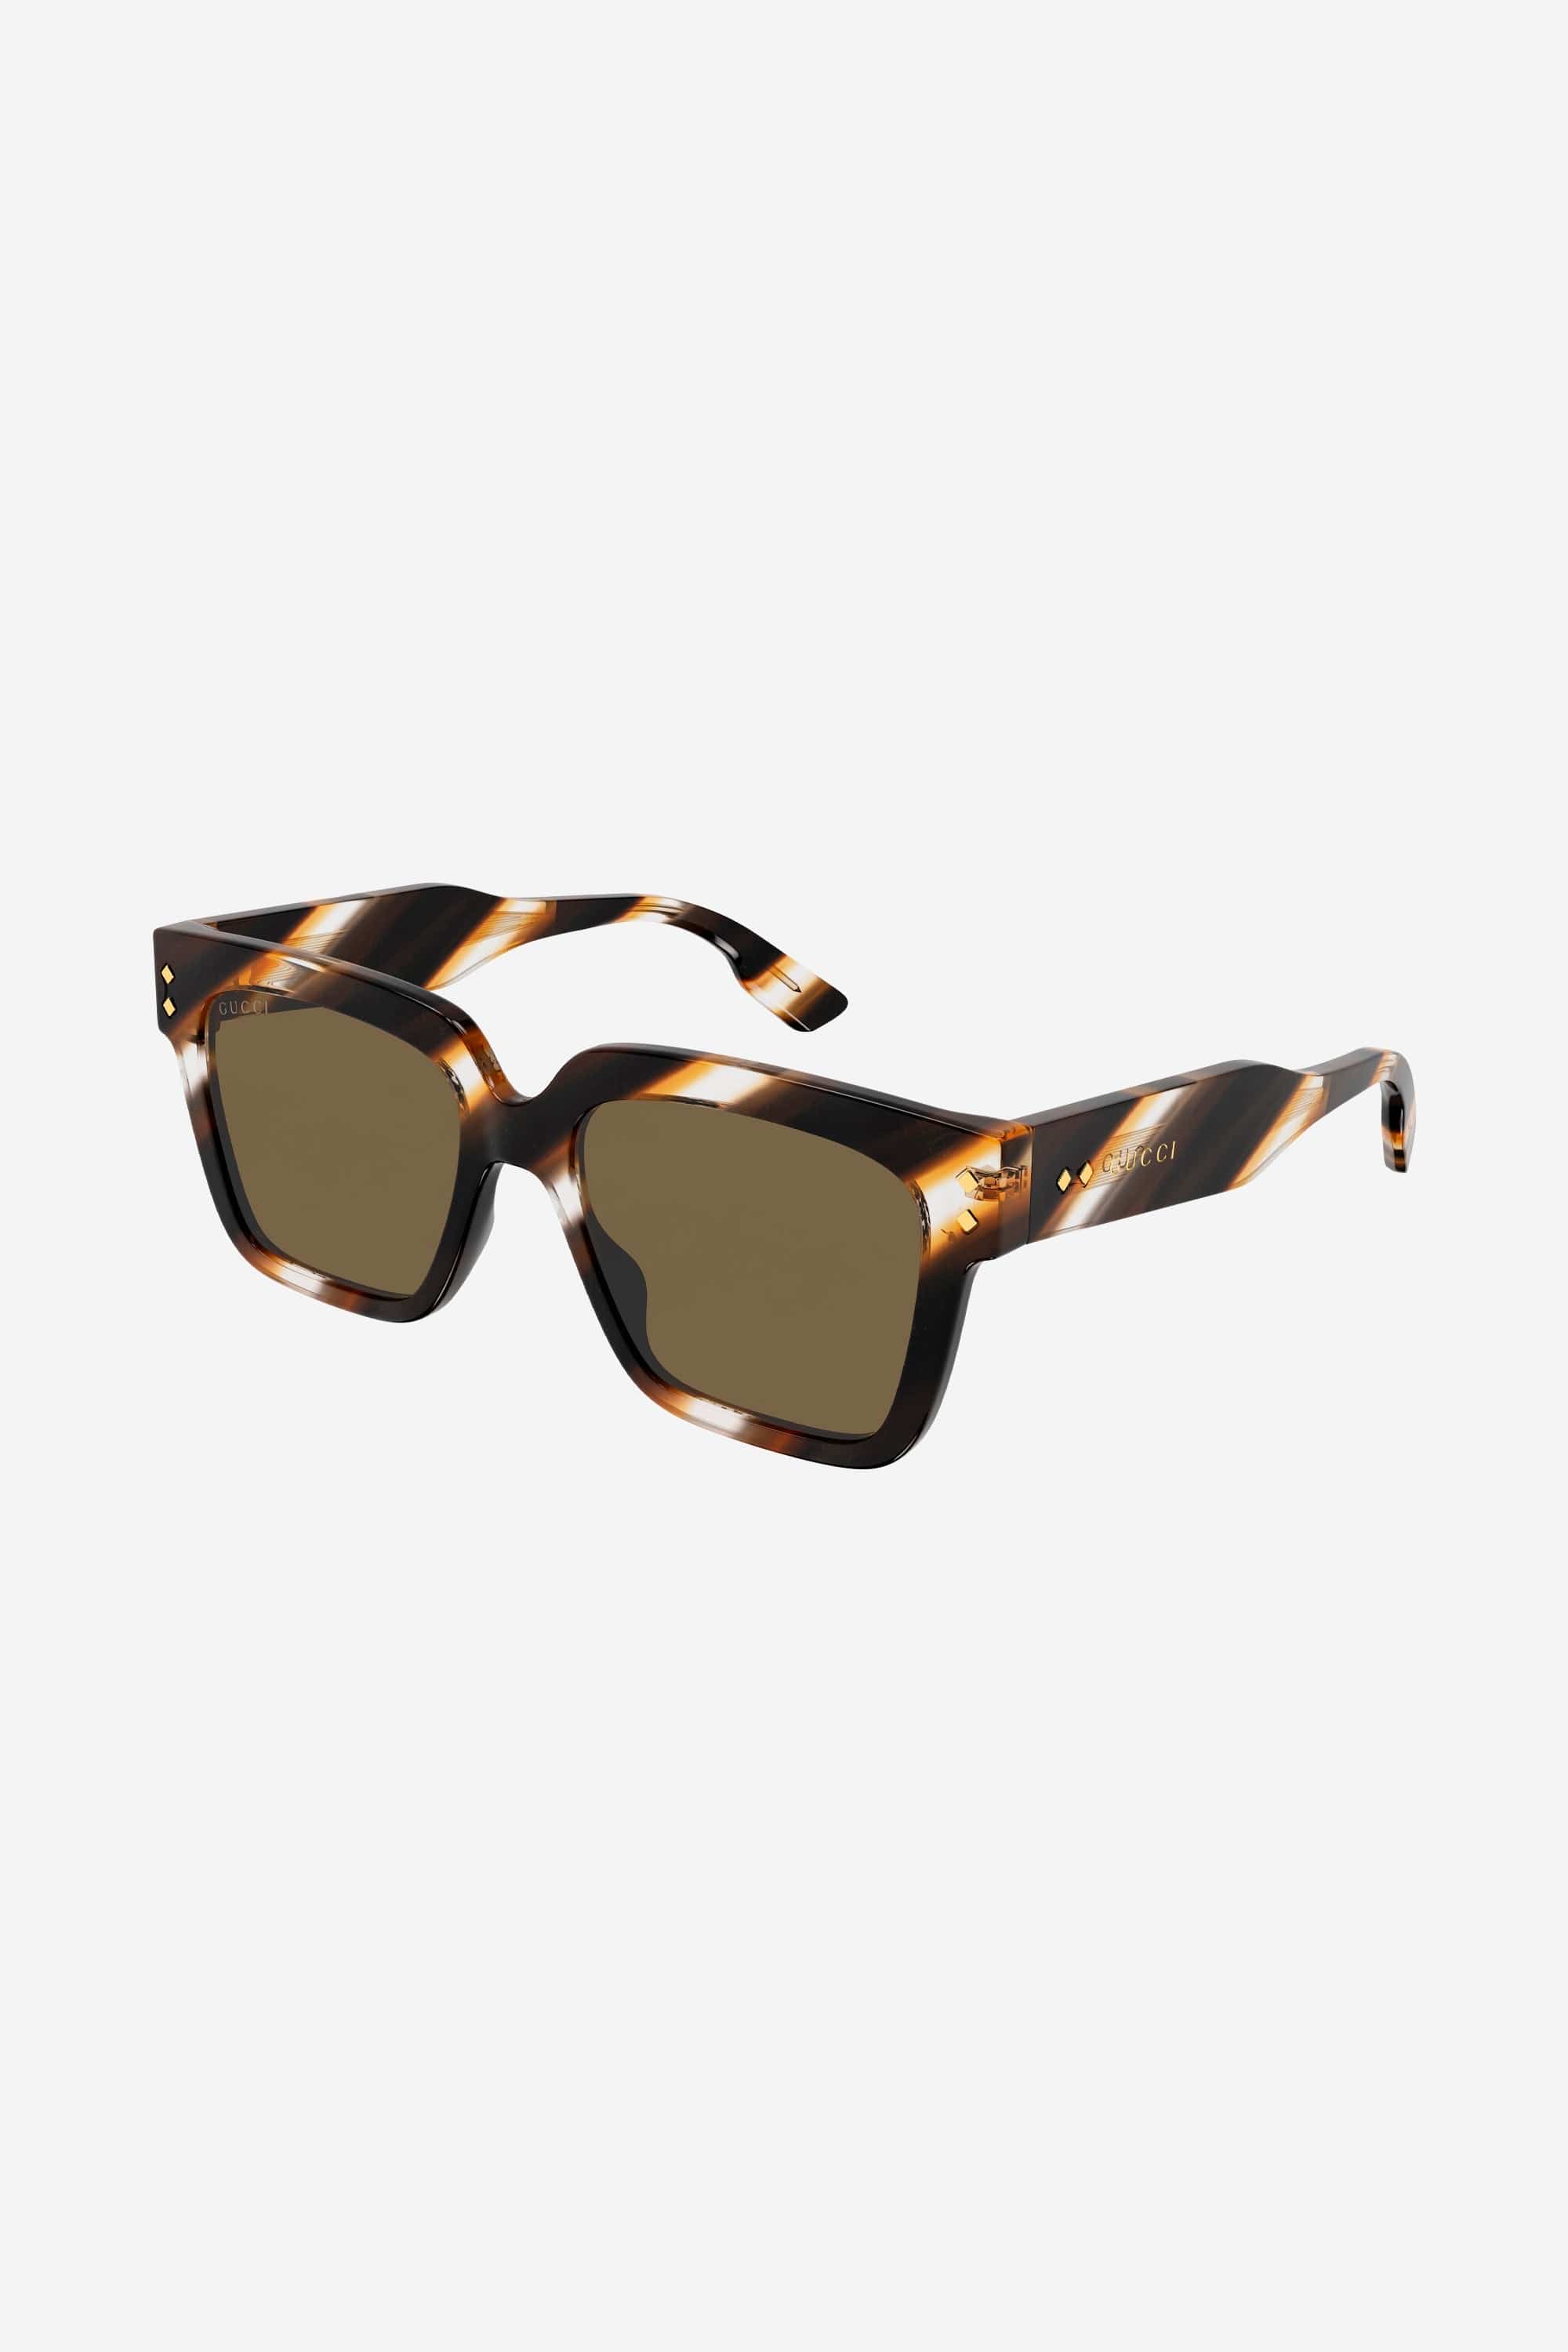 Gucci havana squared sunglasses - Eyewear Club